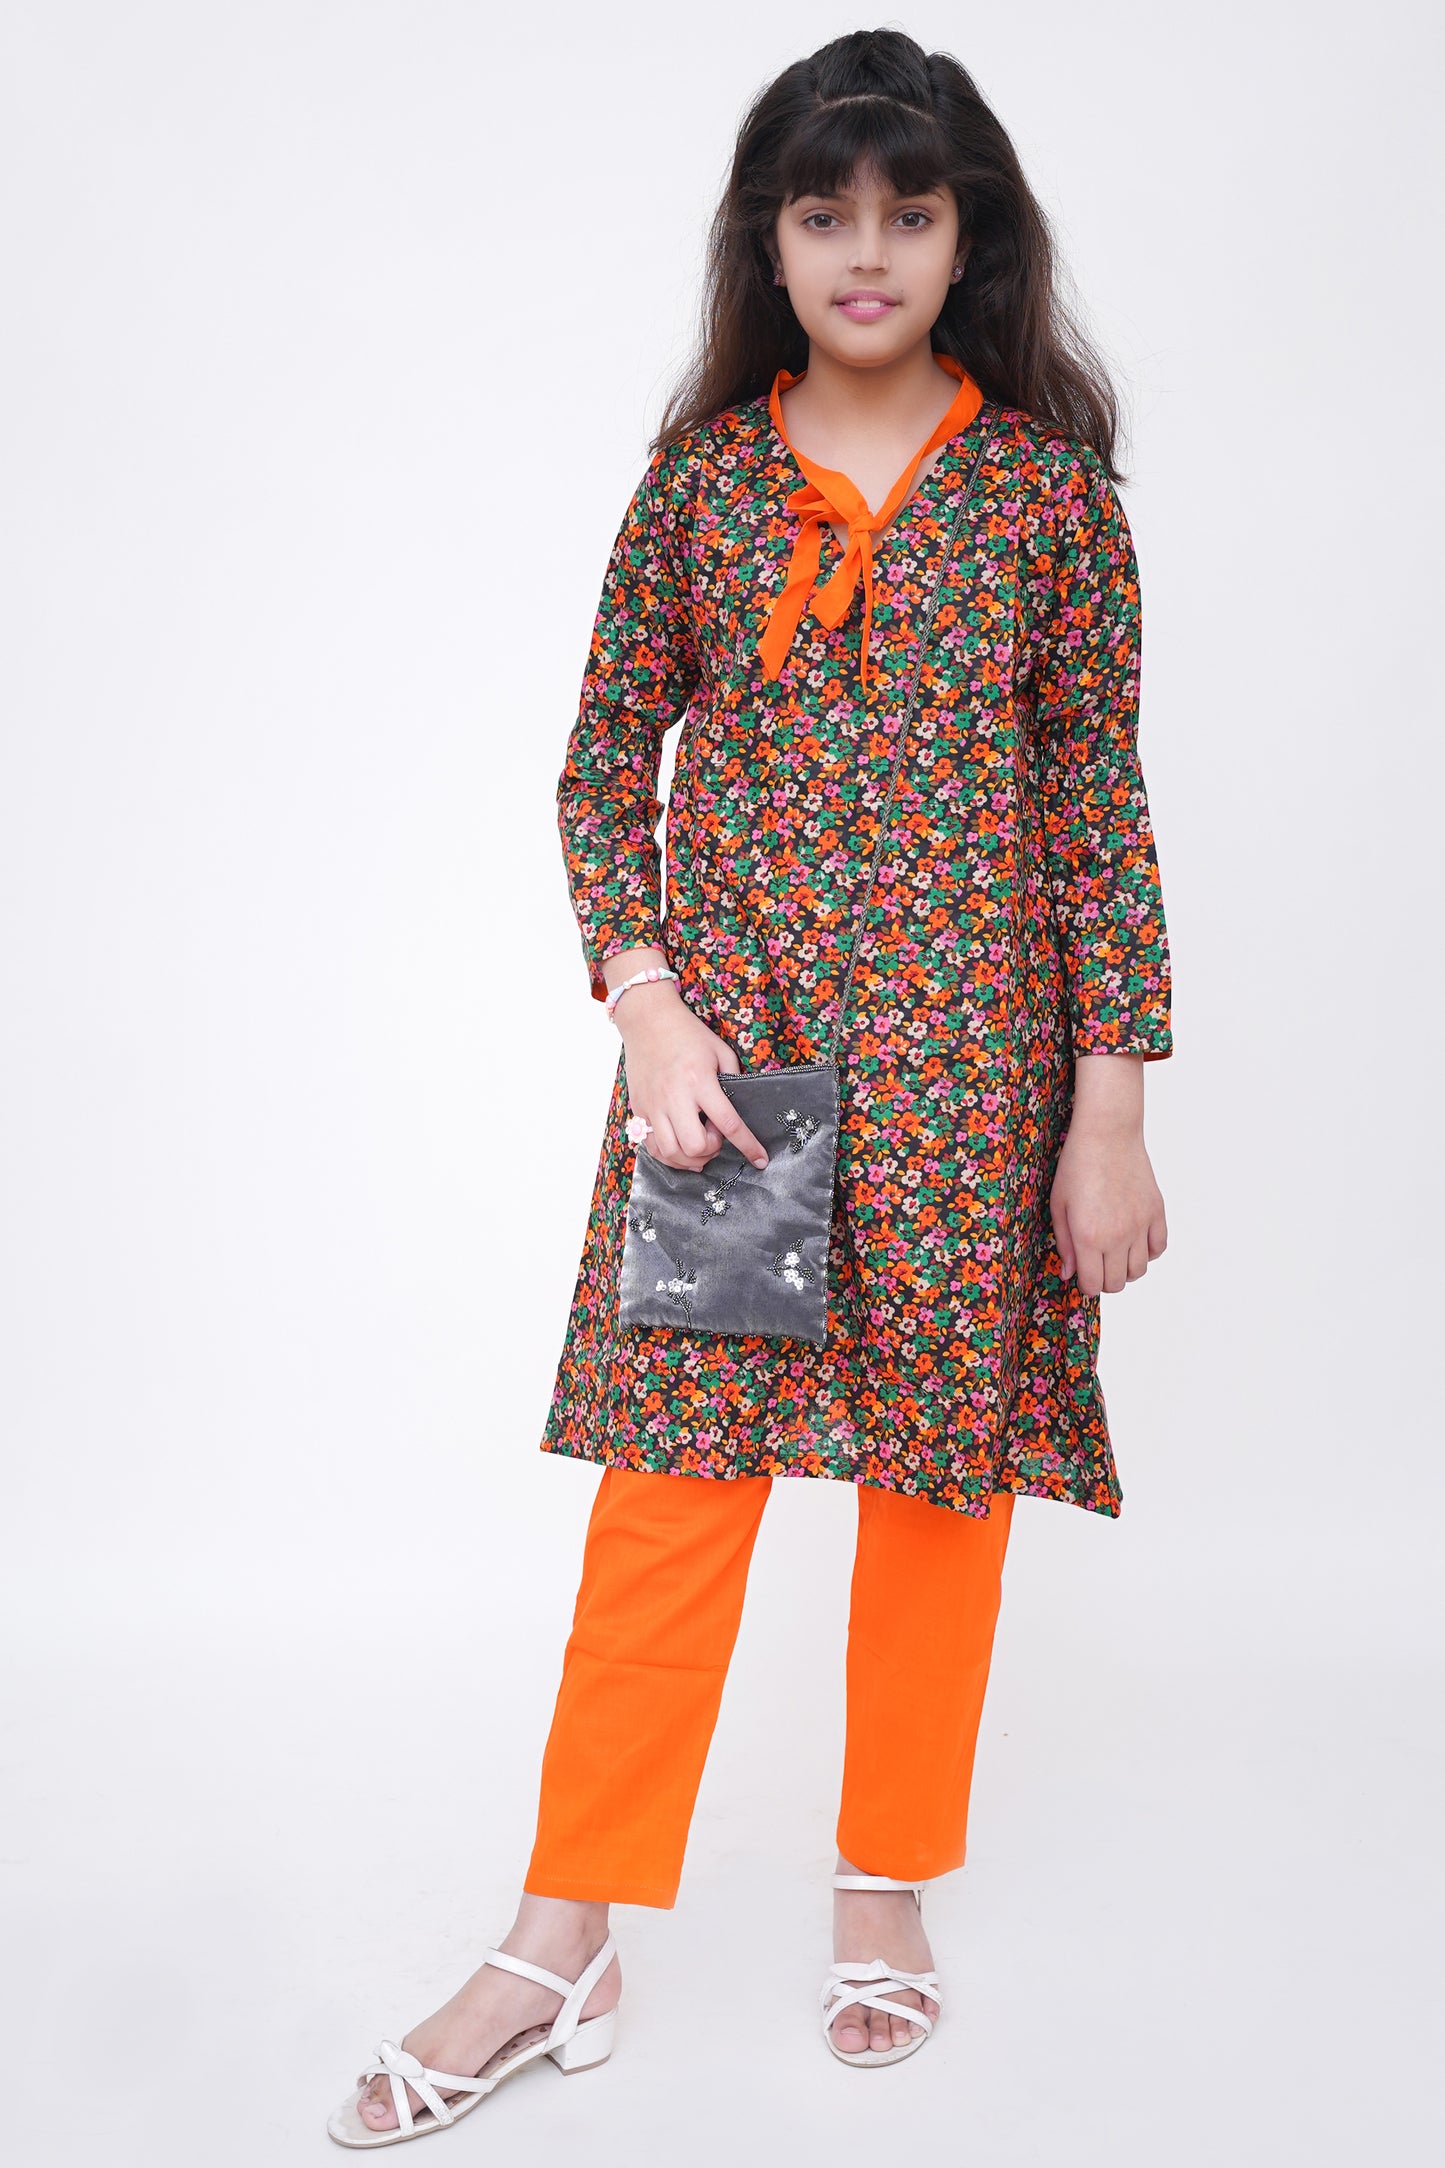 Details more than 69 kurti trouser ke design super hot